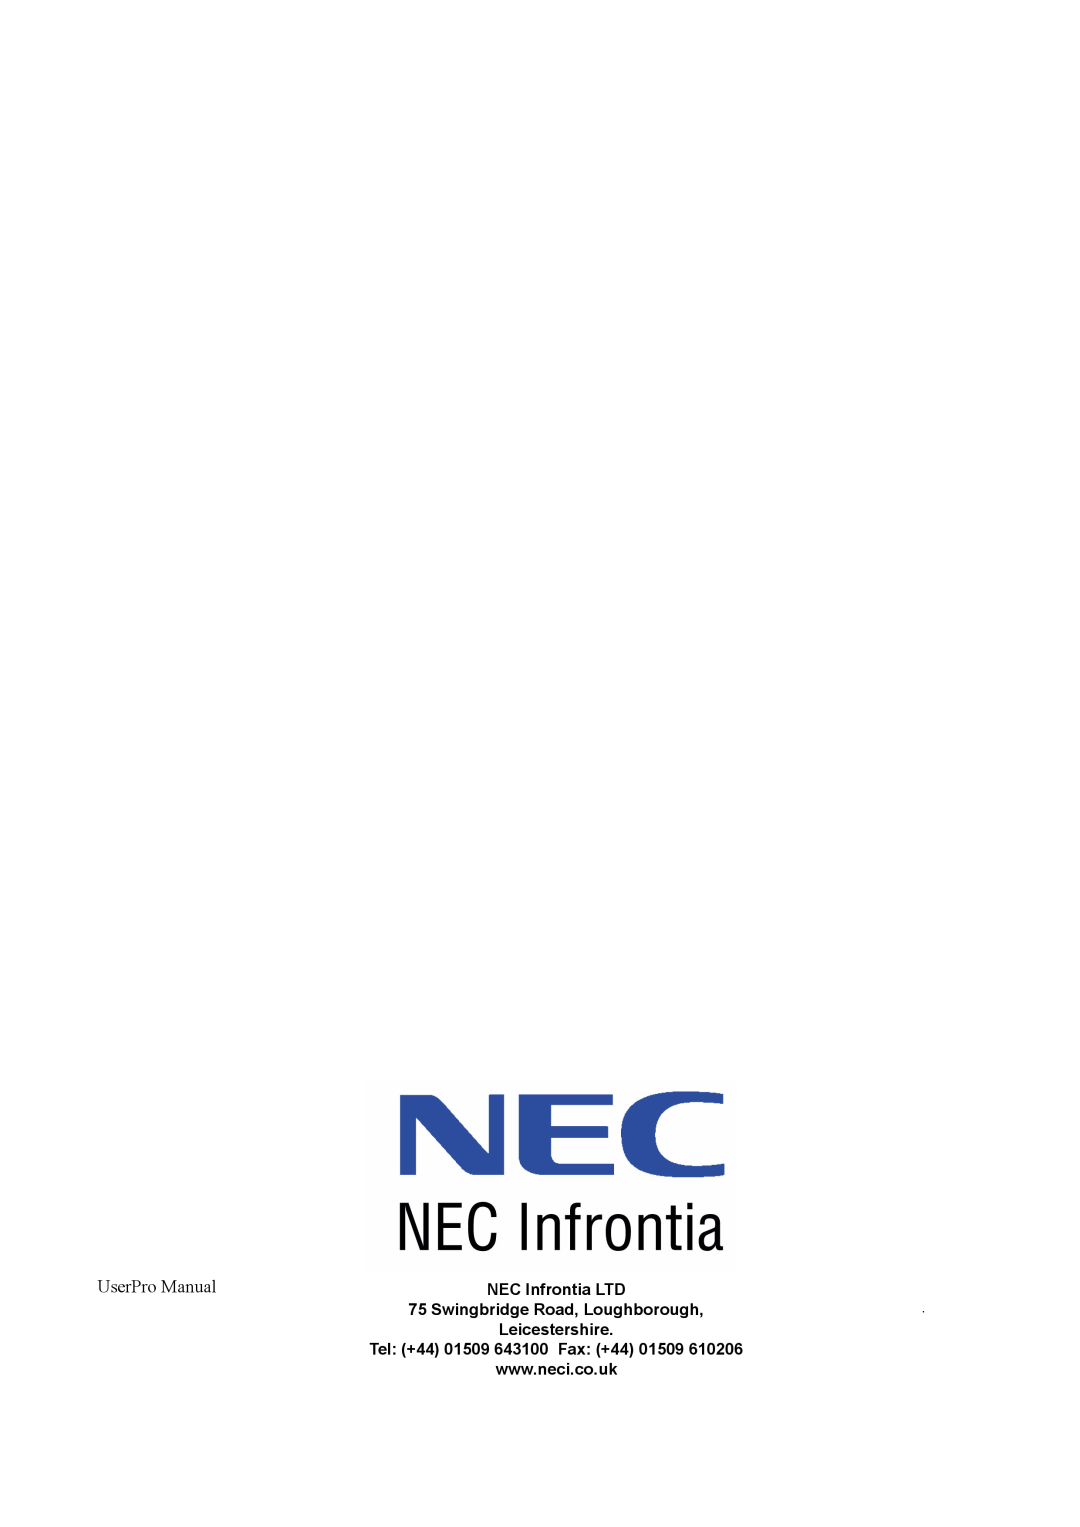 NEC XN120 manual UserPro Manual, Swingbridge Road, Loughborough, Leicestershire, Tel +44 01509 643100 Fax +44 01509 